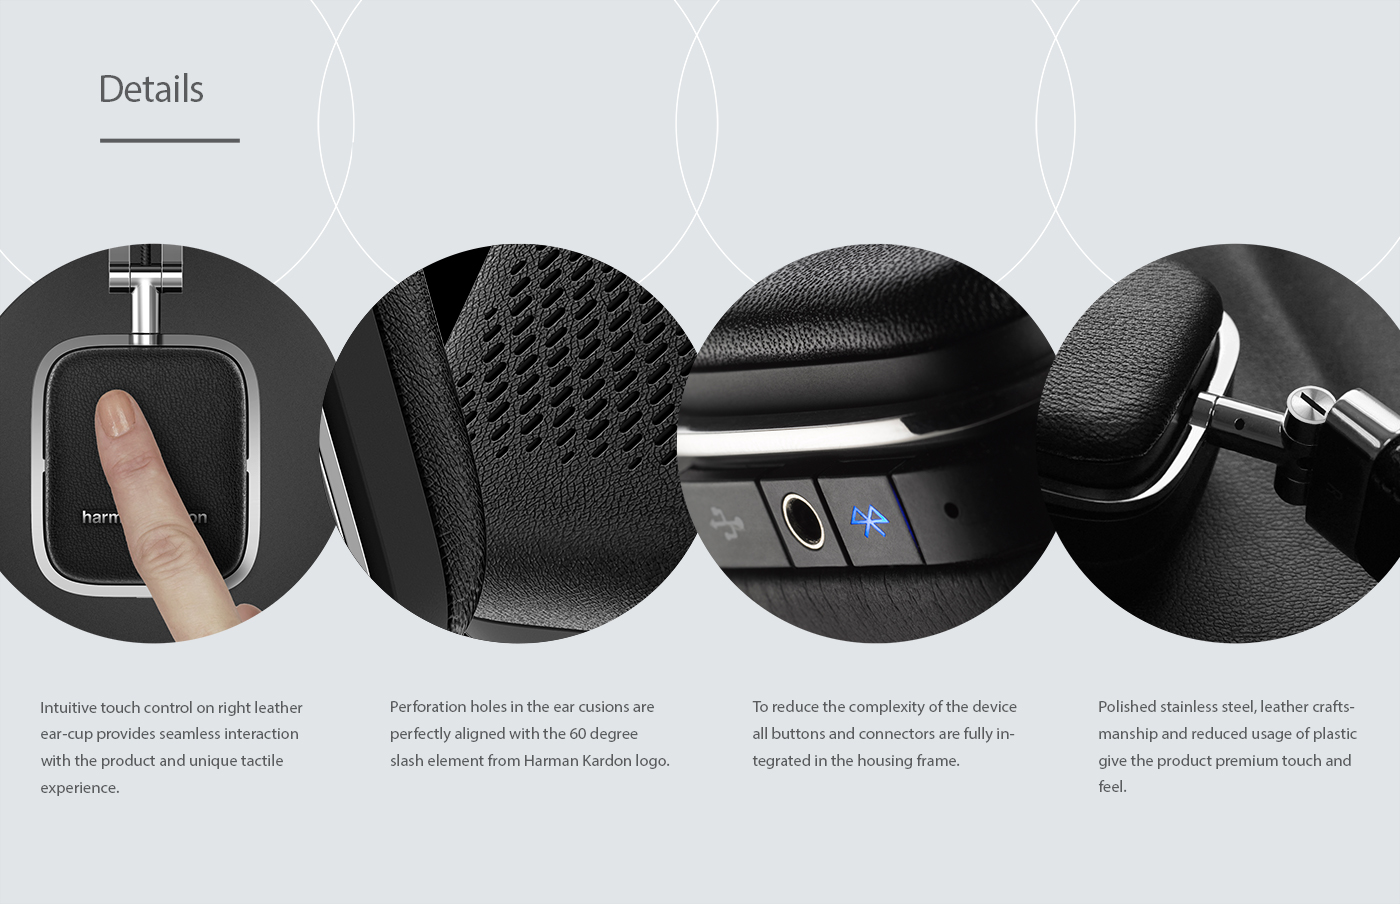 headphones headset Soho Wireless soho Premium Headphones Harman Kardon design bluetooth touch control Harman